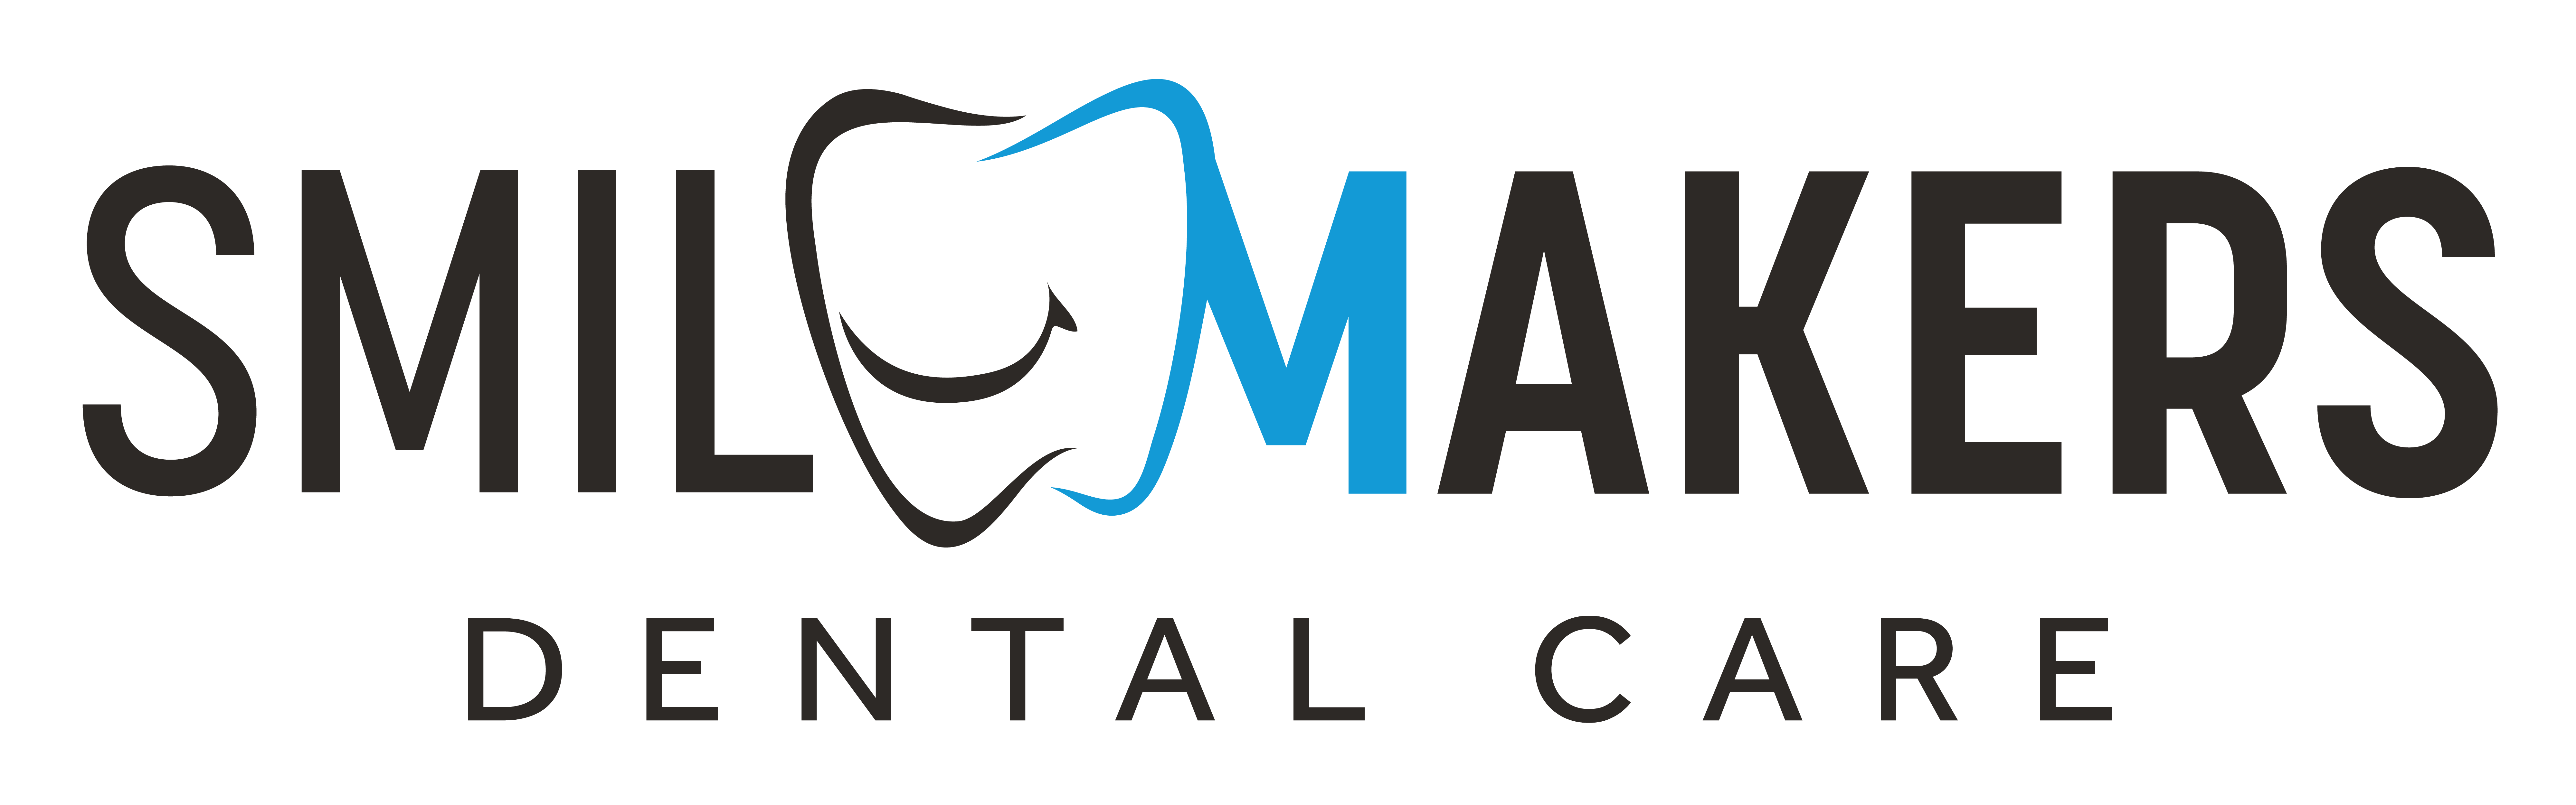 Smile Makers Dental Care logo